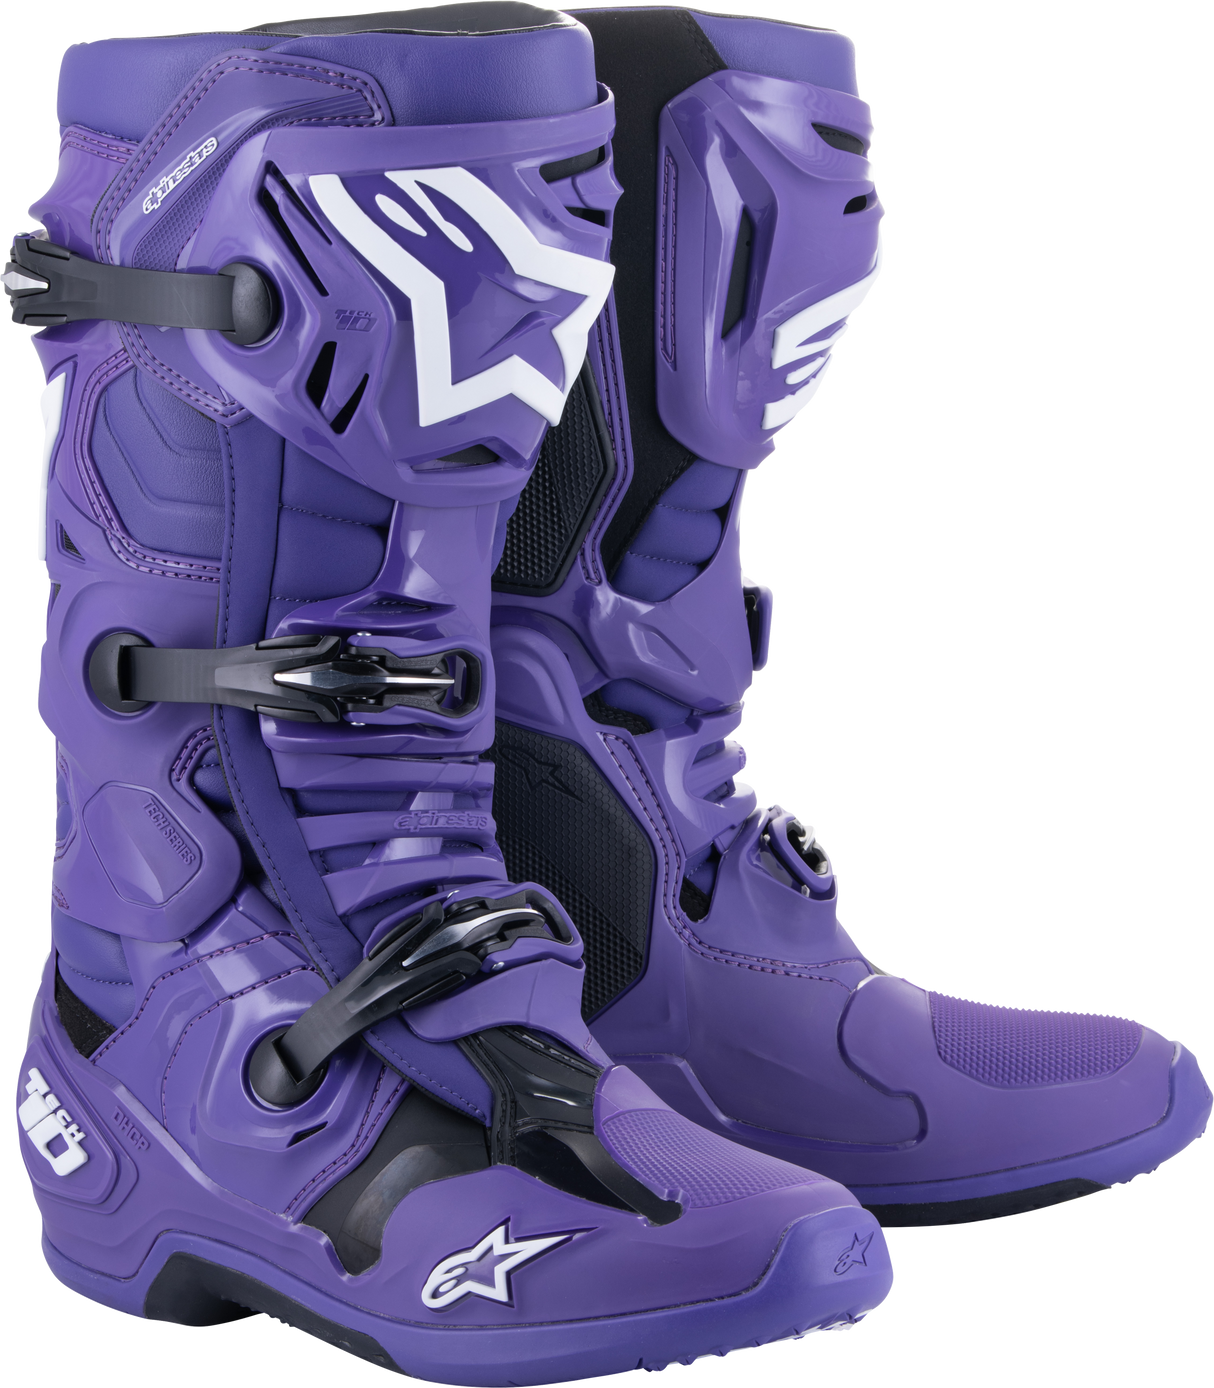 Tech 10 Boots Ultraviolet Black Sz 14